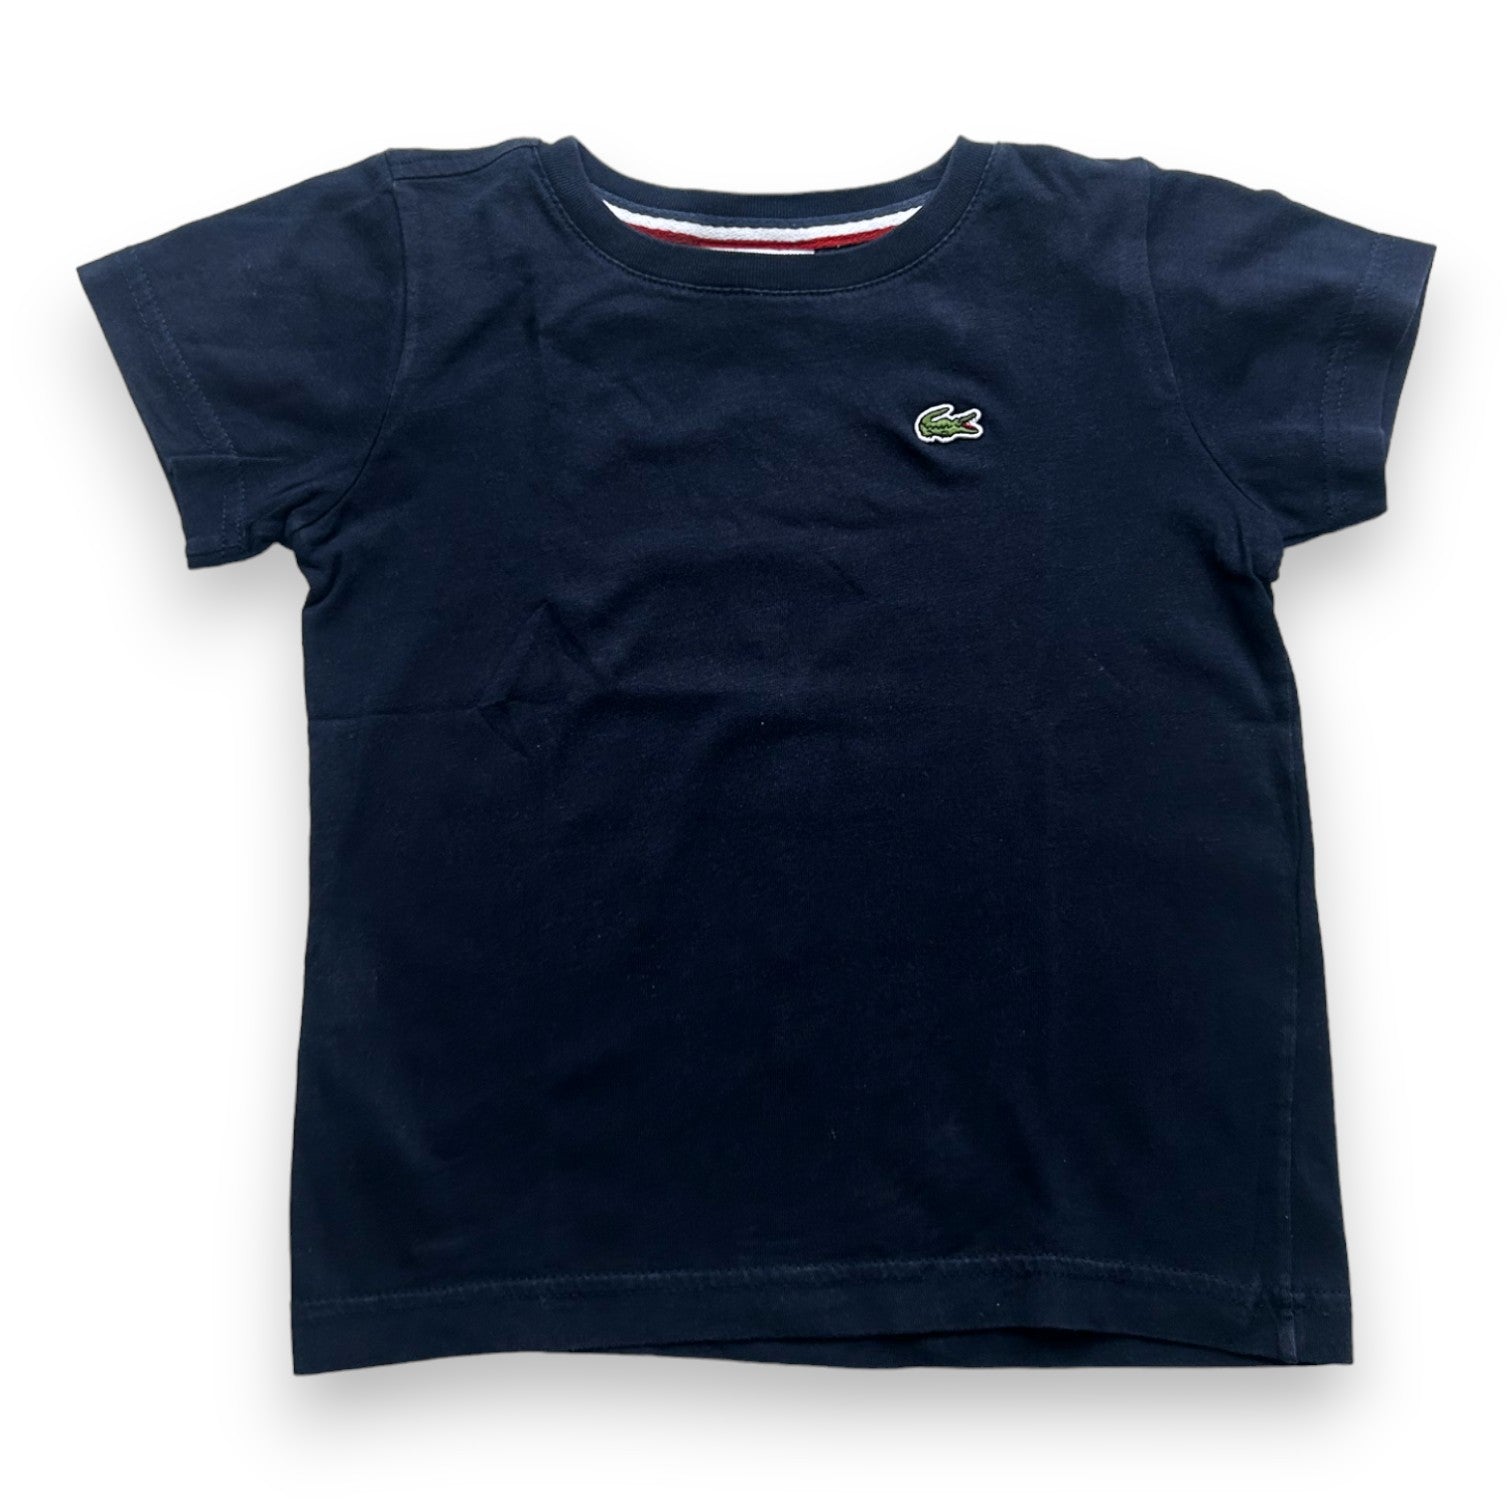 LACOSTE - T-shirt bleu - 2 ans